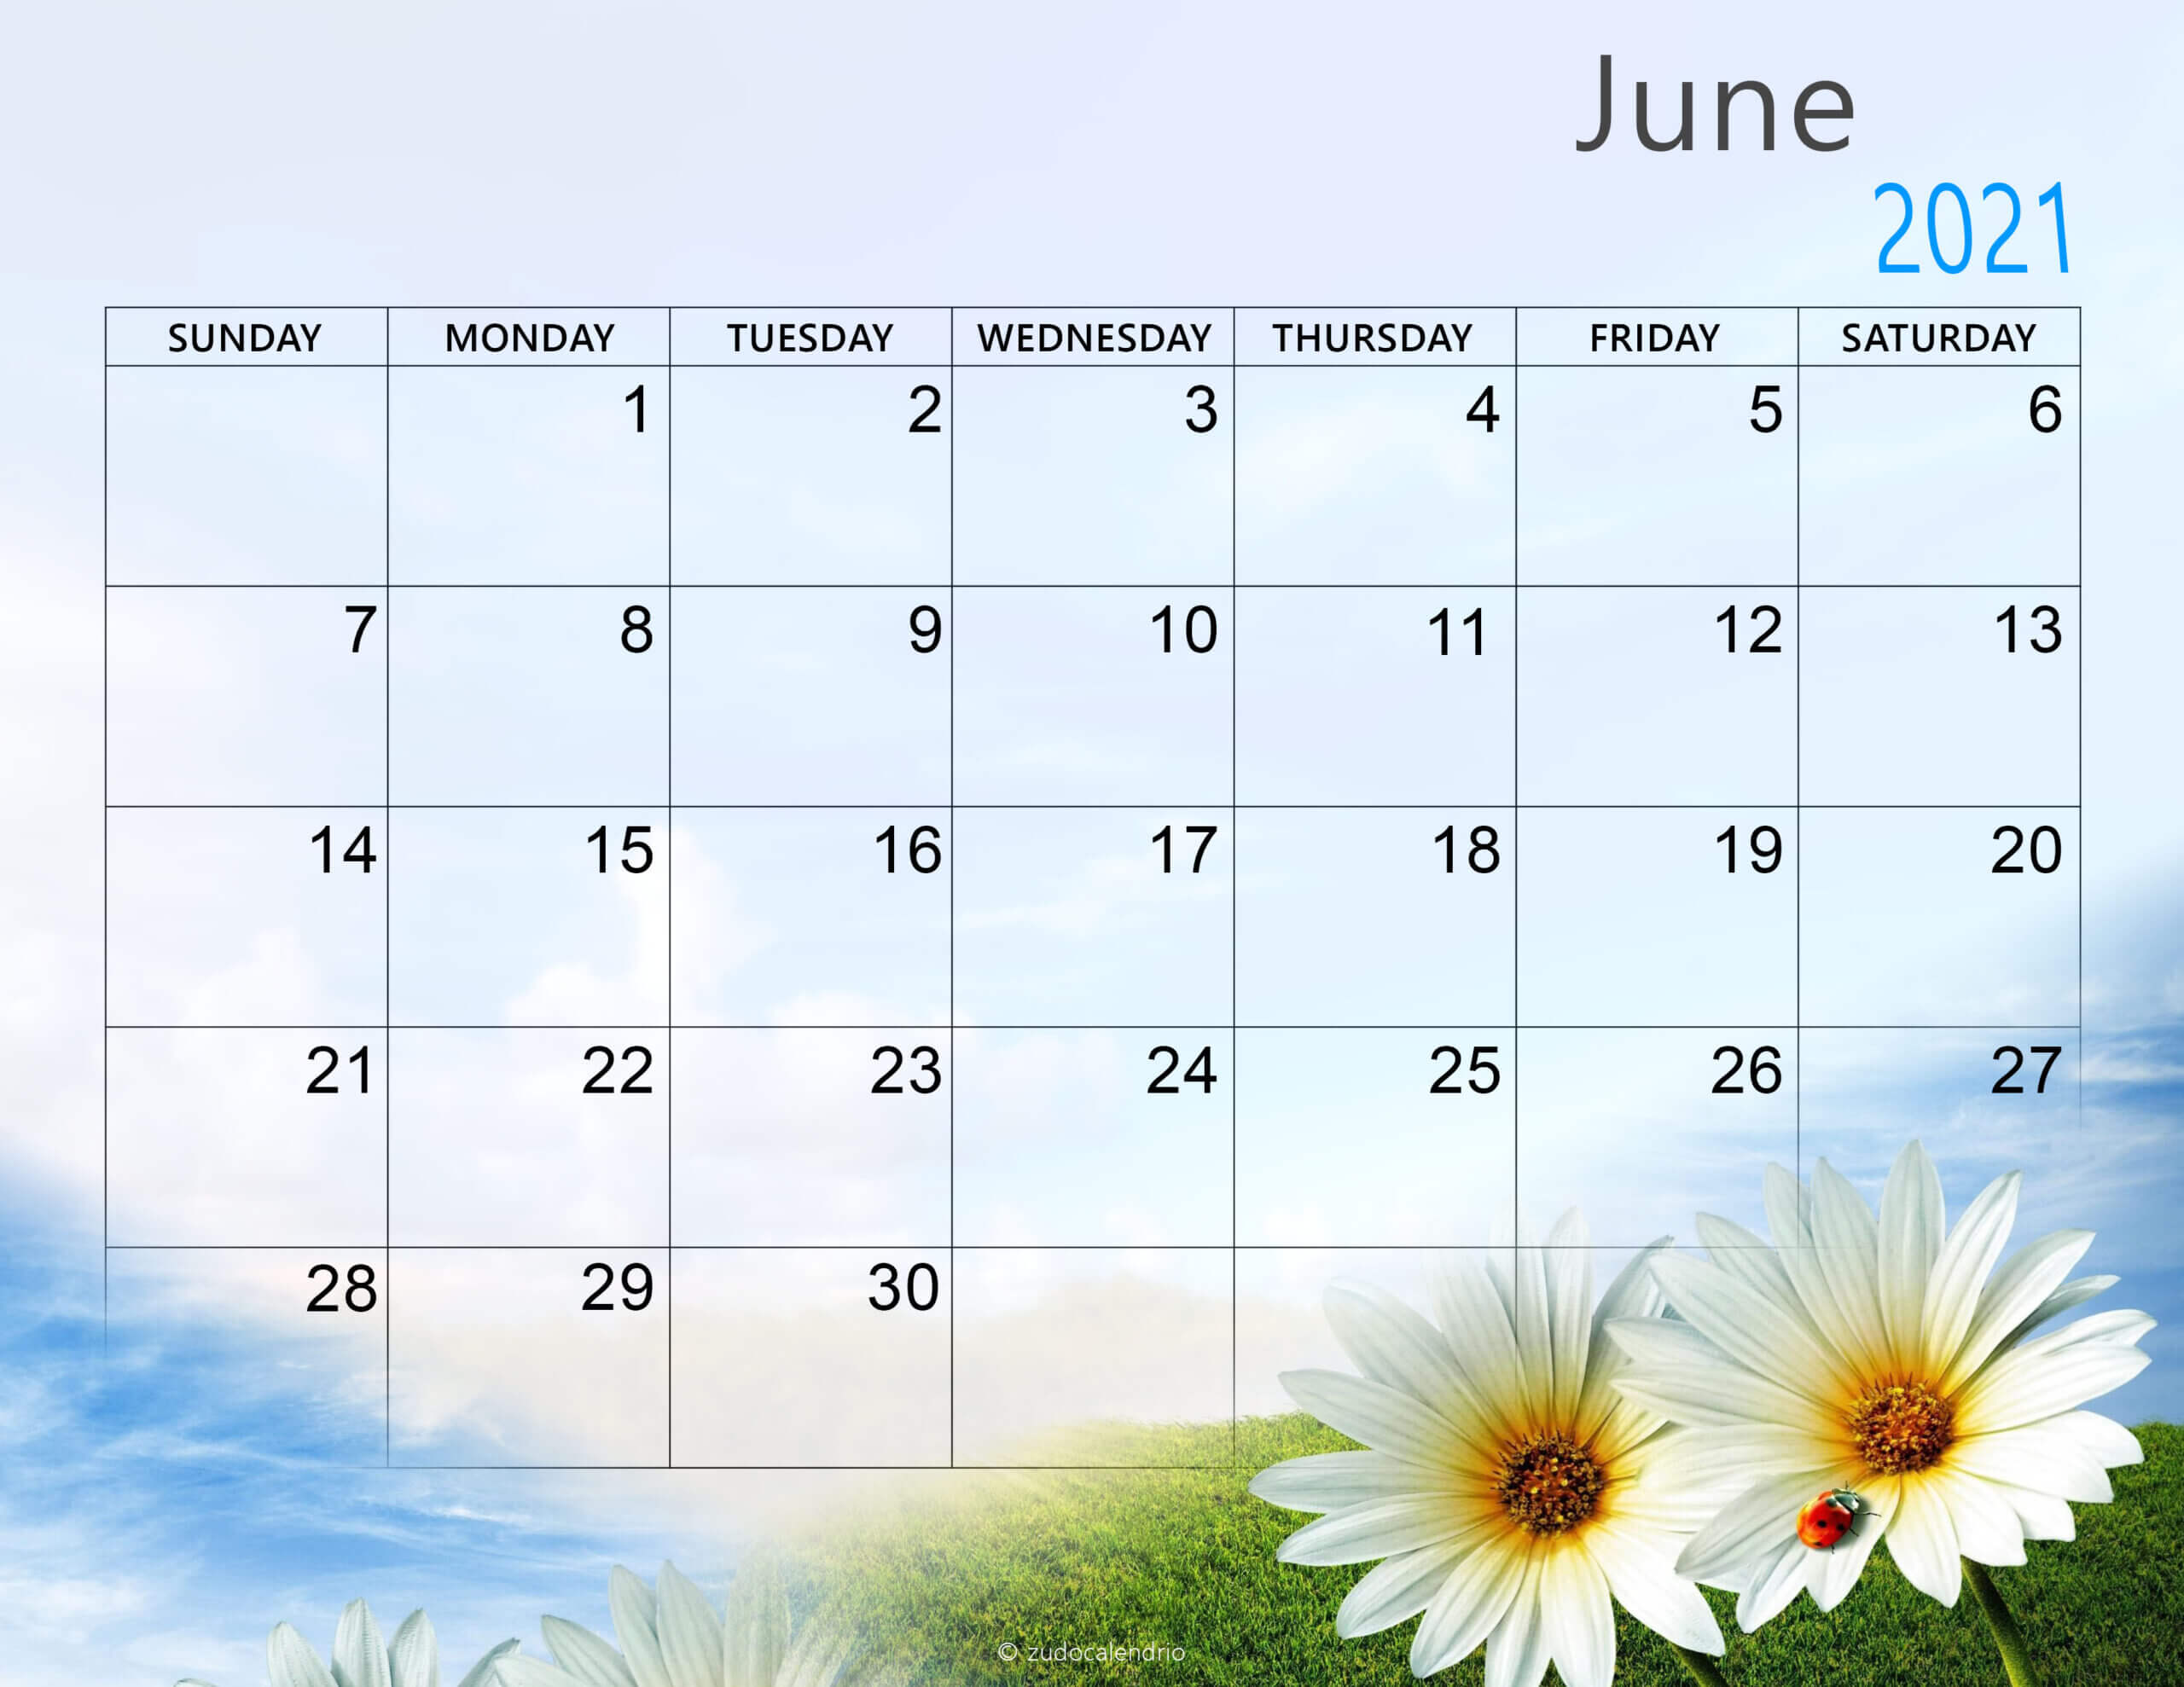 June 2021 Desktop Calendar Wallpaper